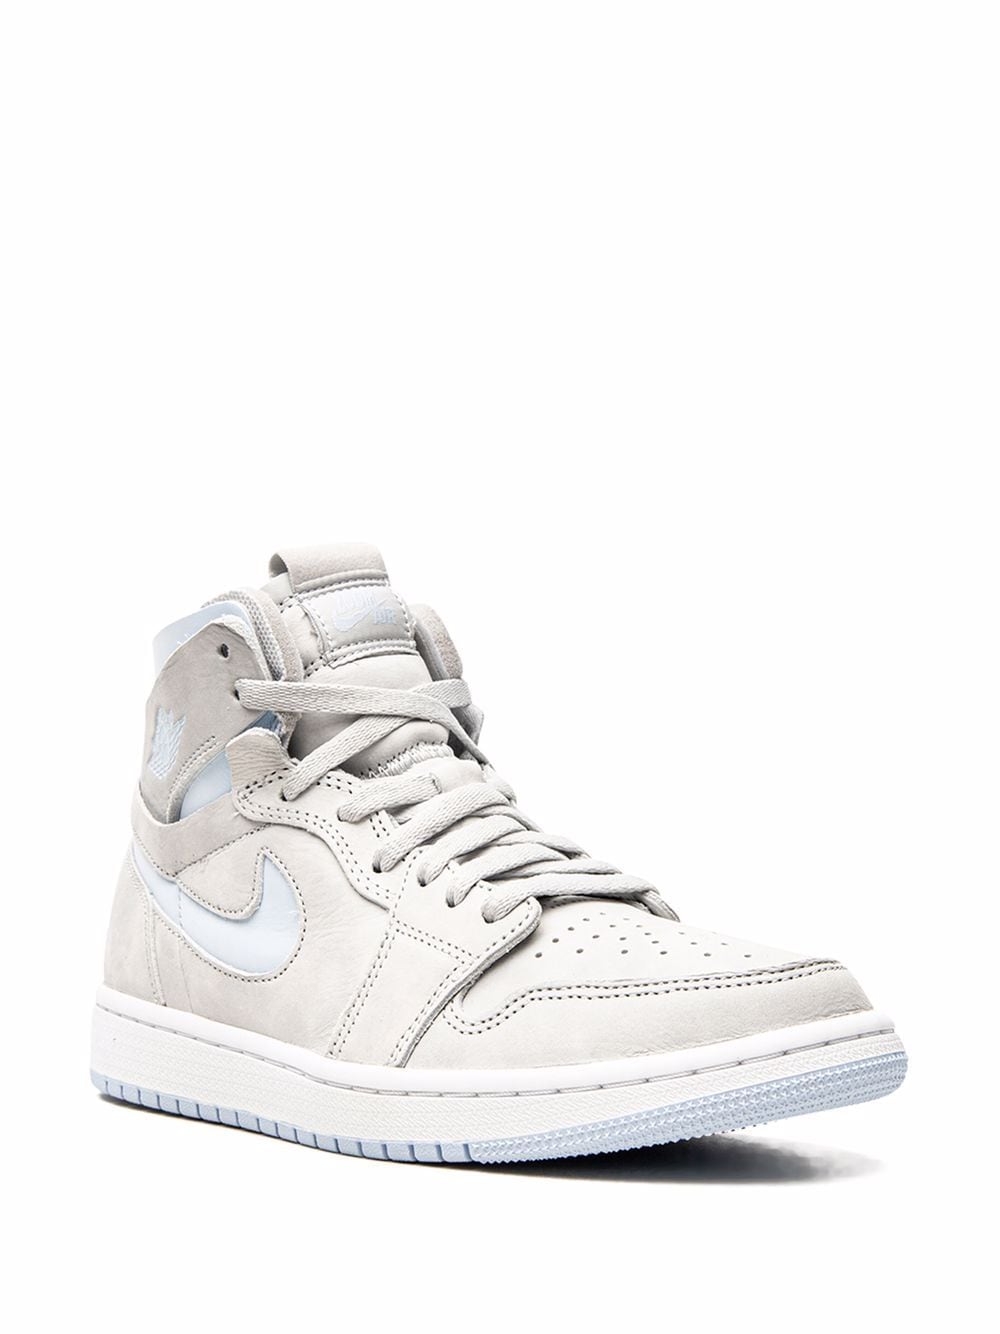 Image 2 of Nike Air Jordan 1 High Zoom CMFT "Grey Fog" sneakers